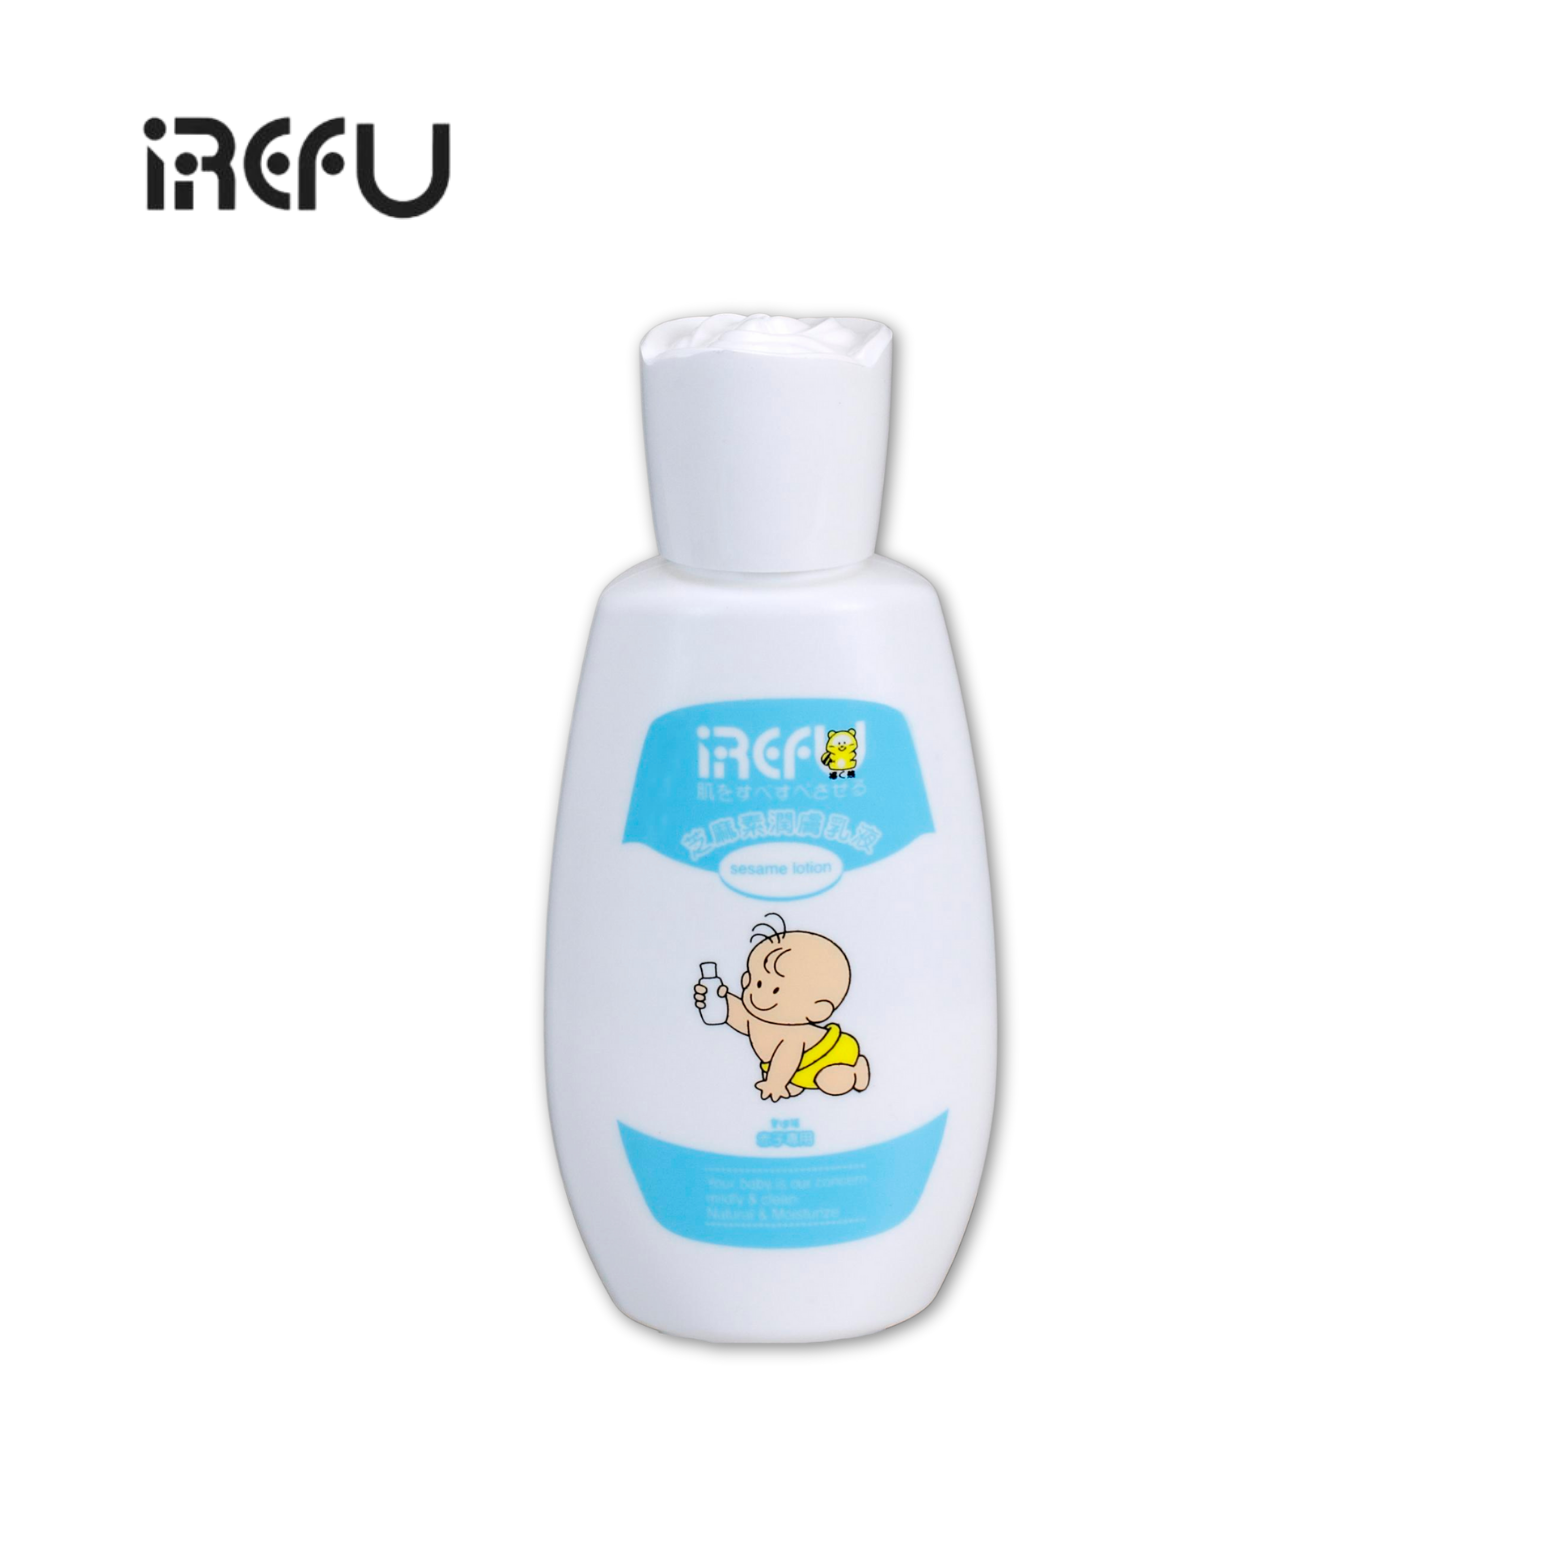 IREFU愛得福 芝麻素嬰兒潤膚乳液 120ml